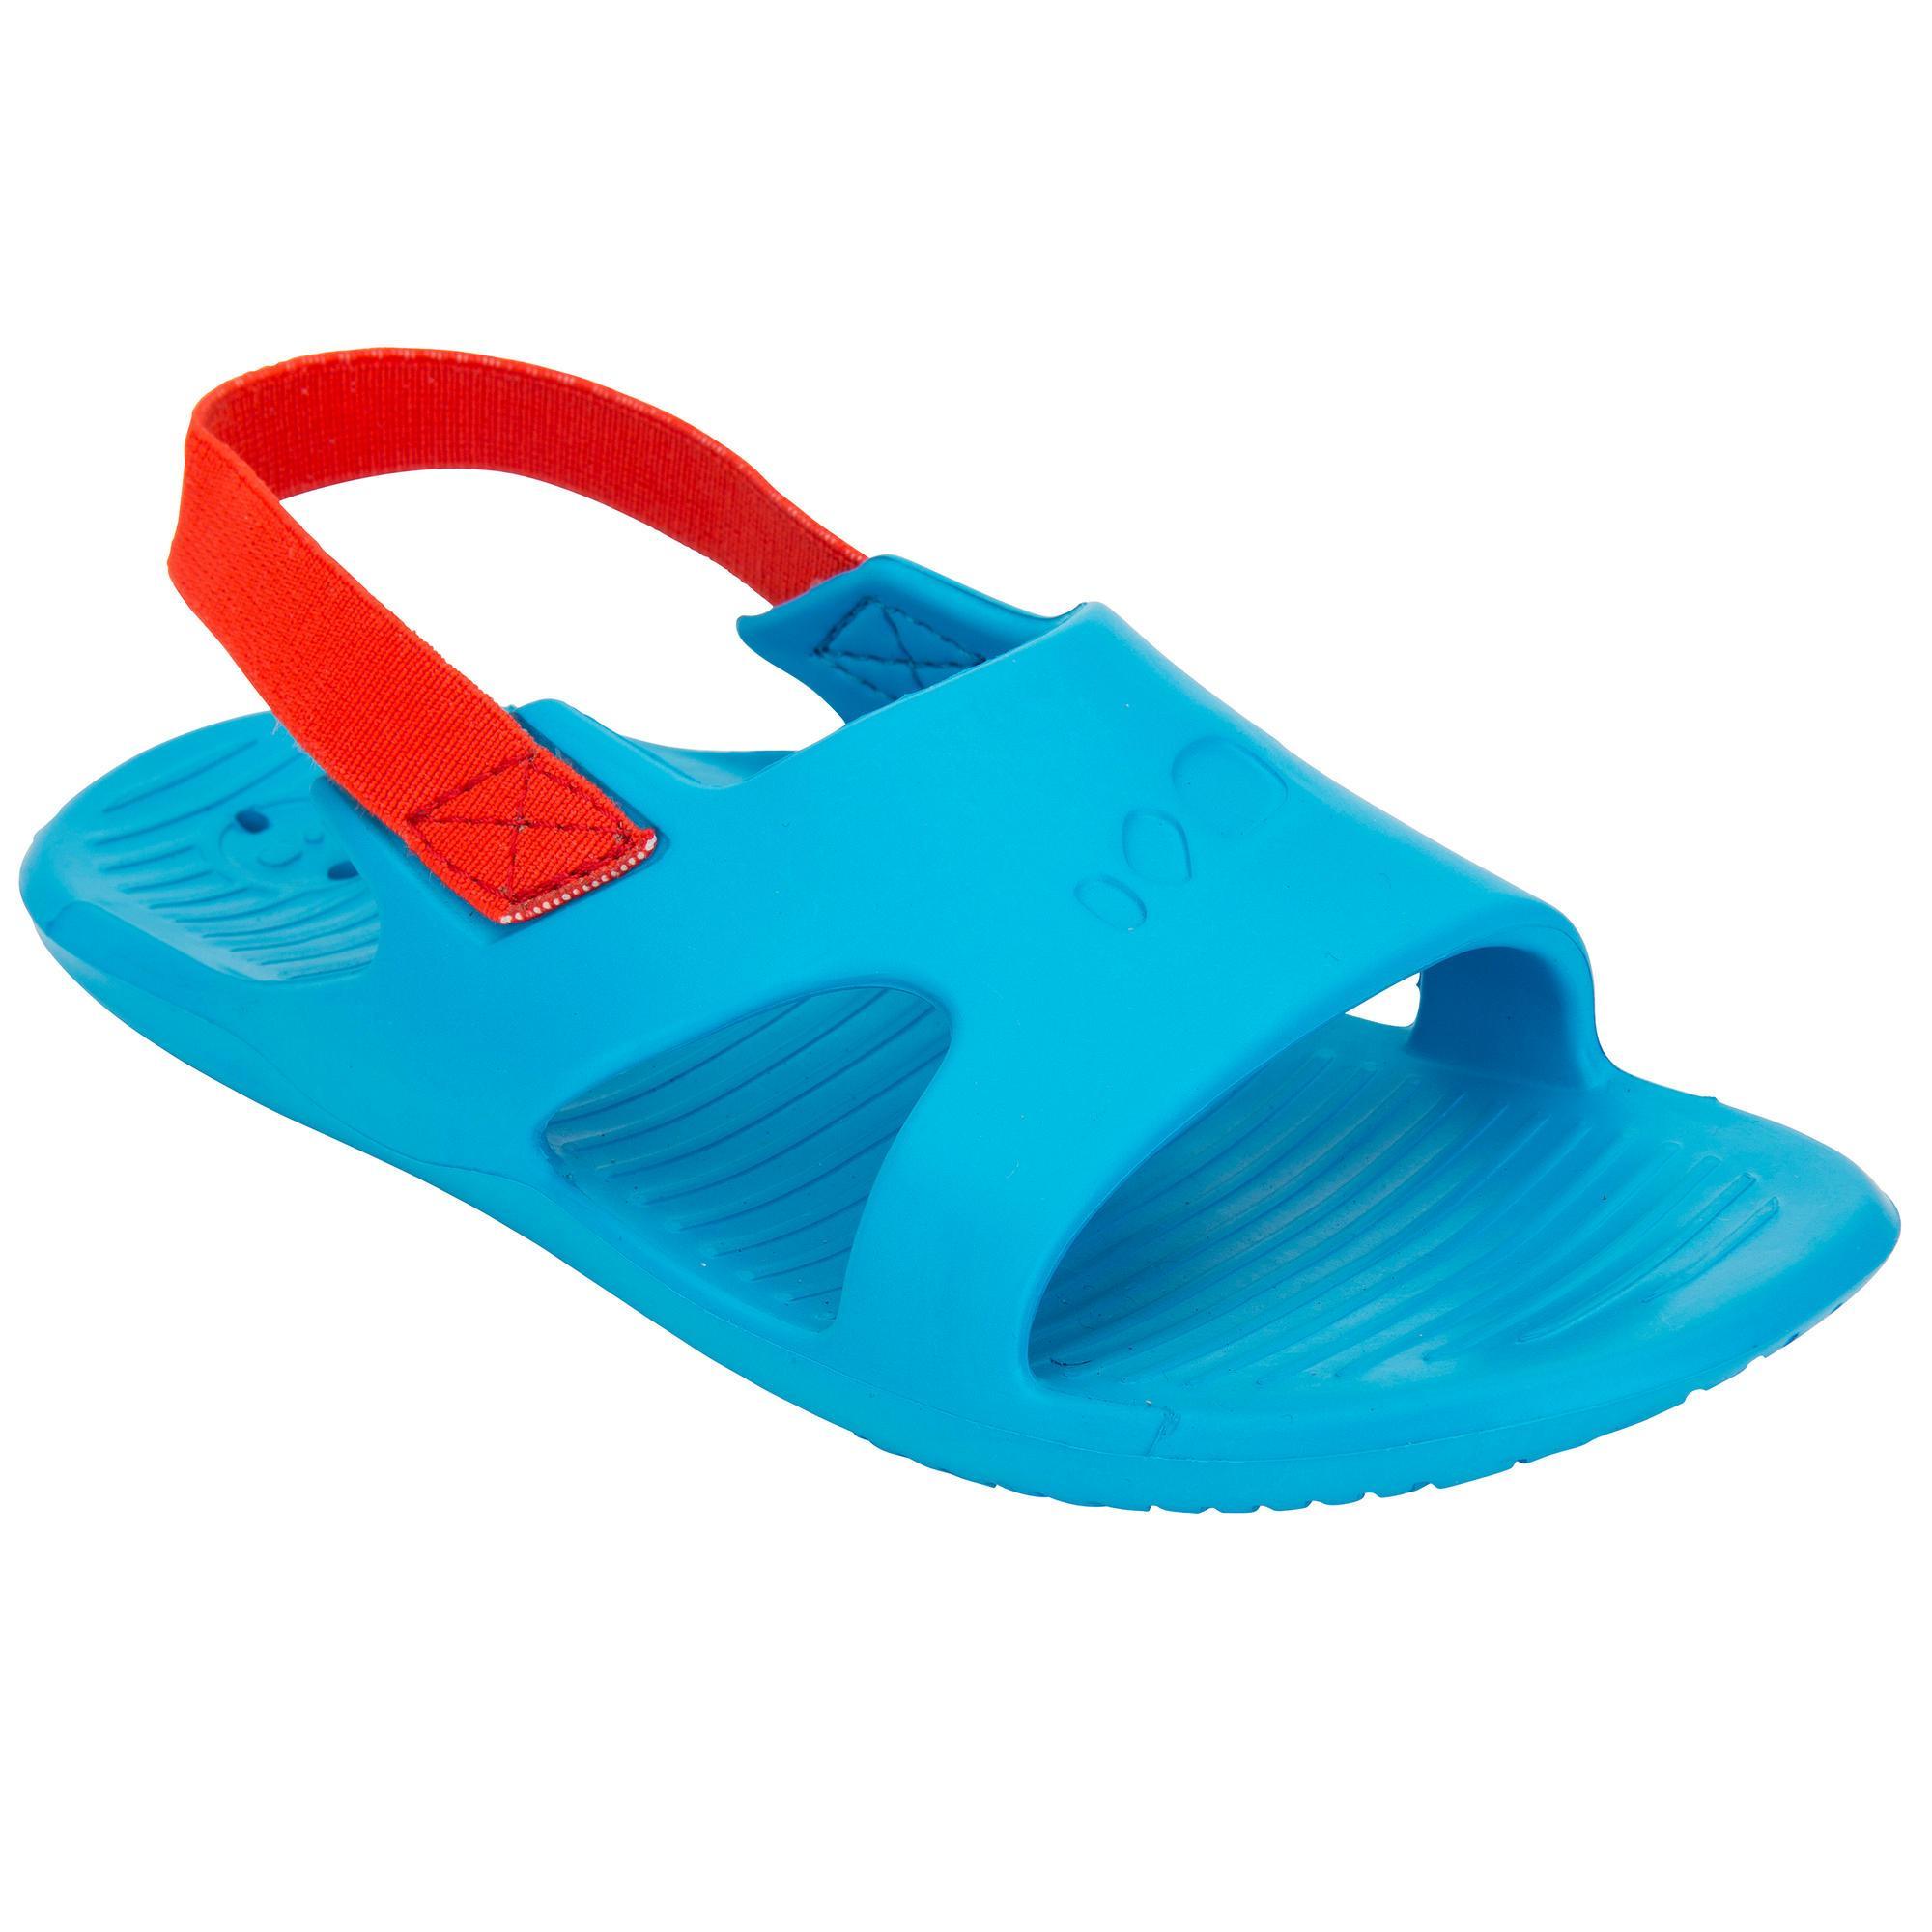 decathlon slippers online